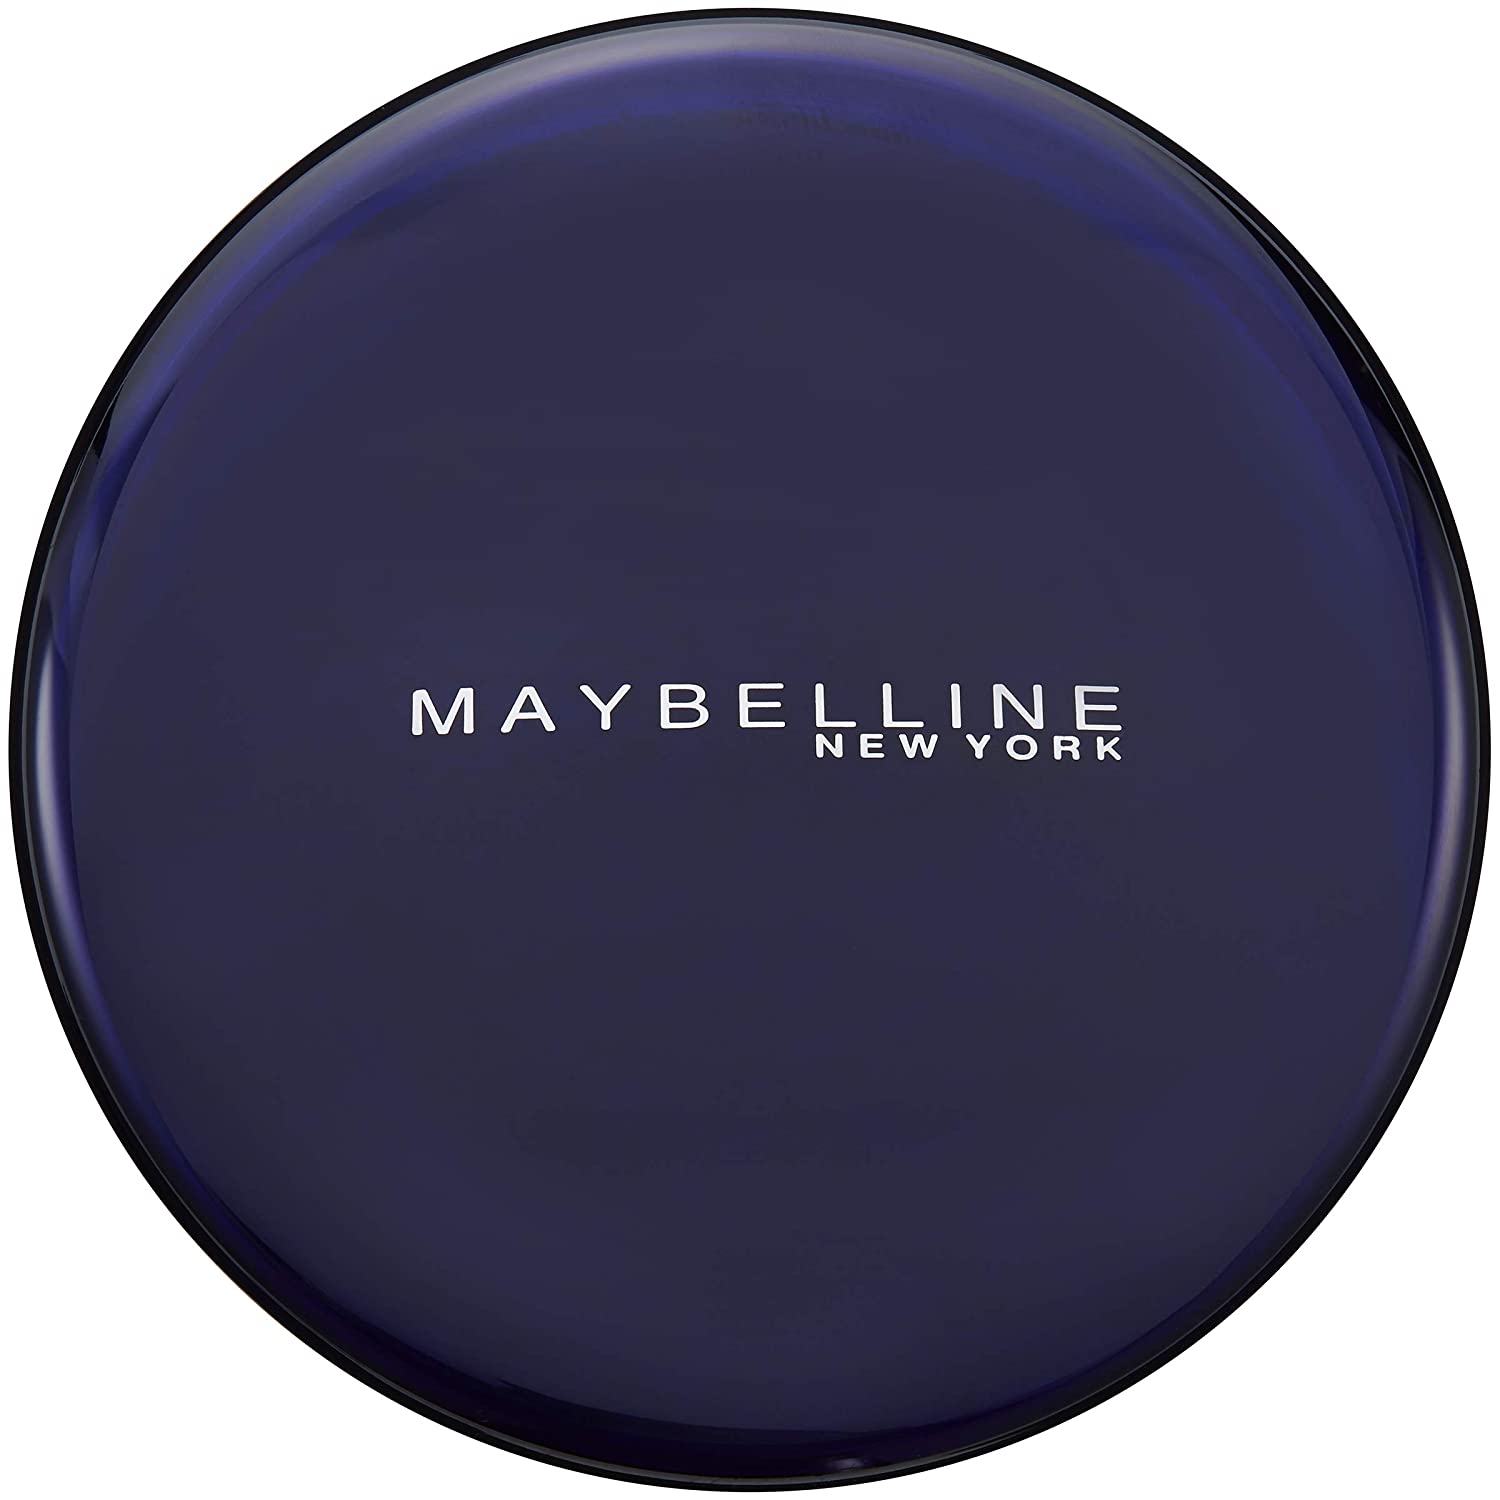 Maybelline Shine Free Oil Control Loose Powder, Light, 0.7 oz - image 1 of 3